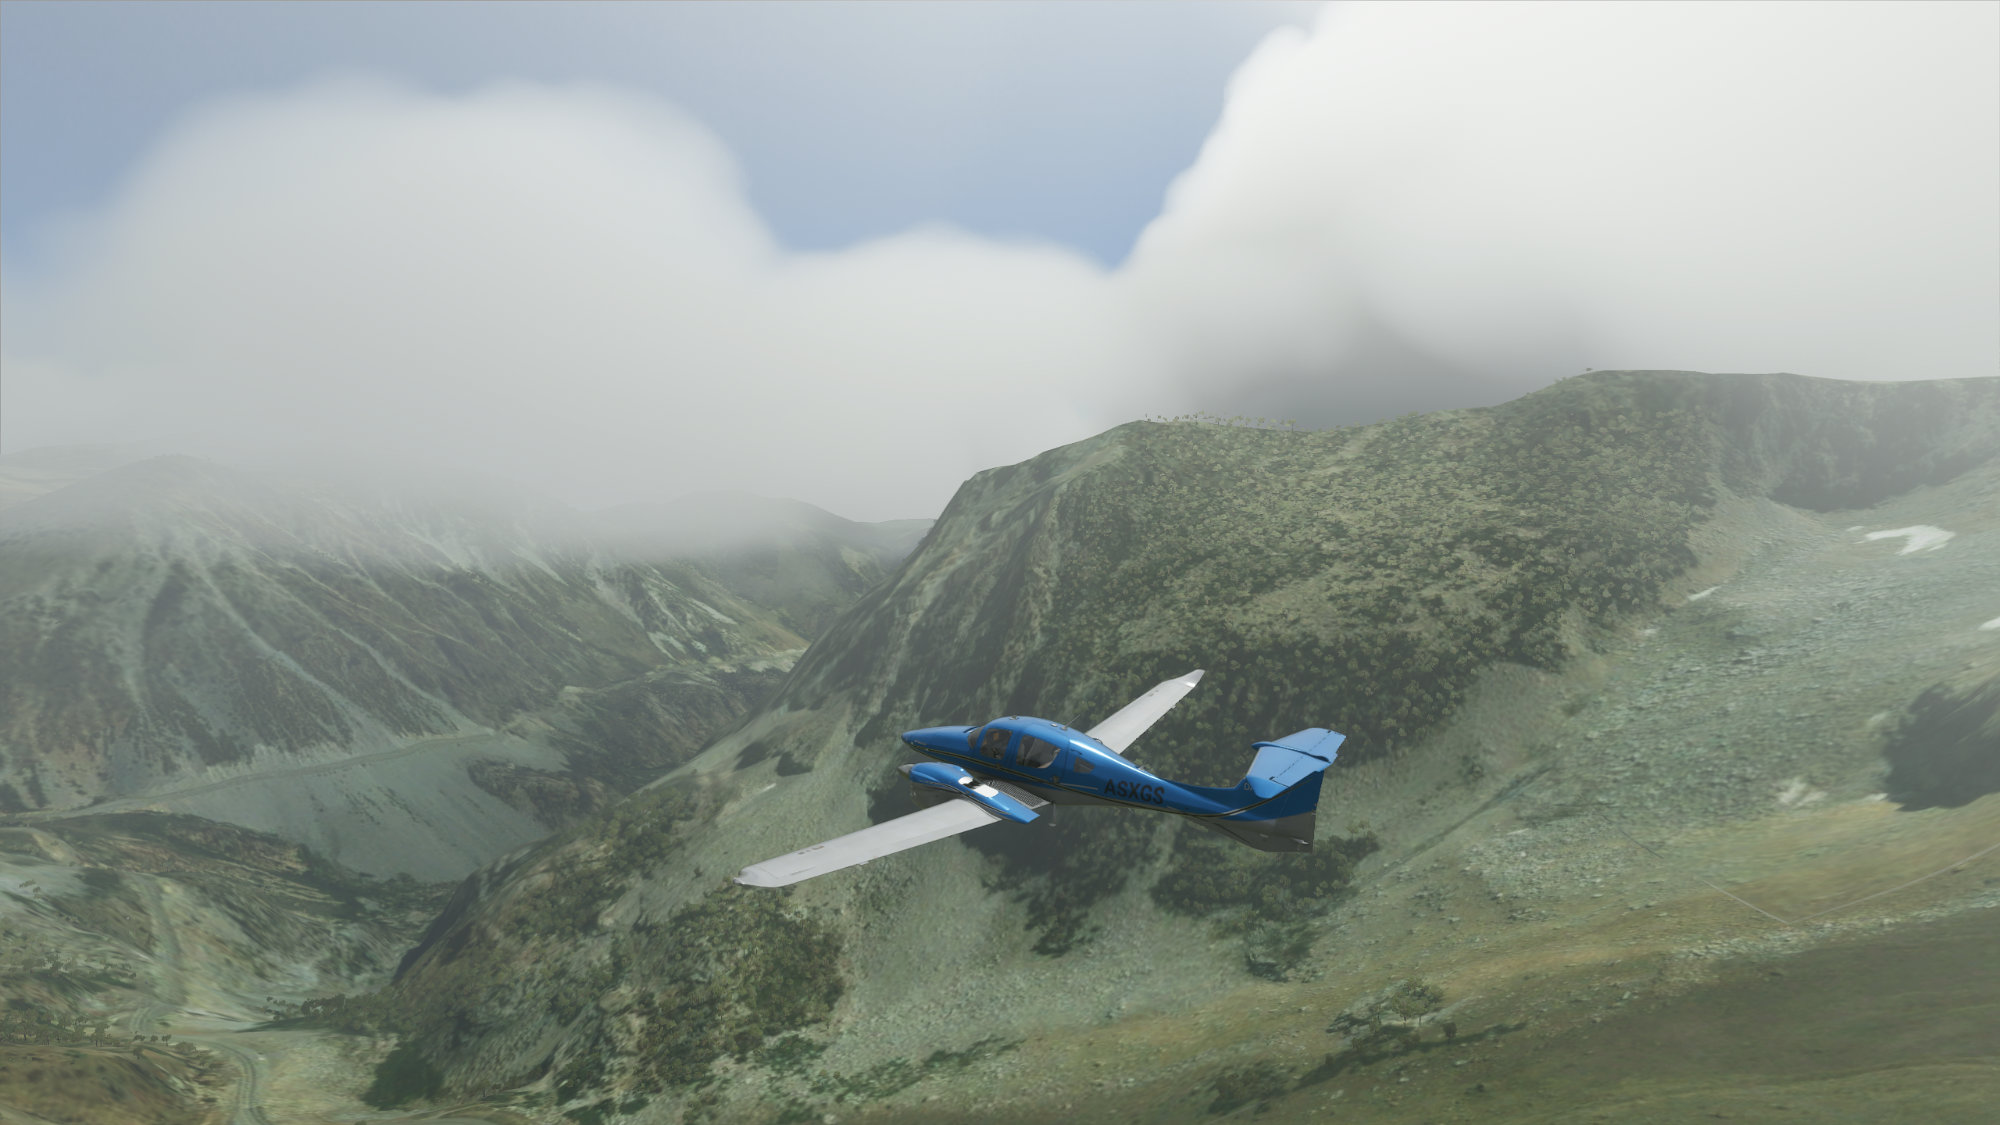 https://www.numerama.com/content/uploads/2020/07/flight-simulator-low-yosemite-8.jpg